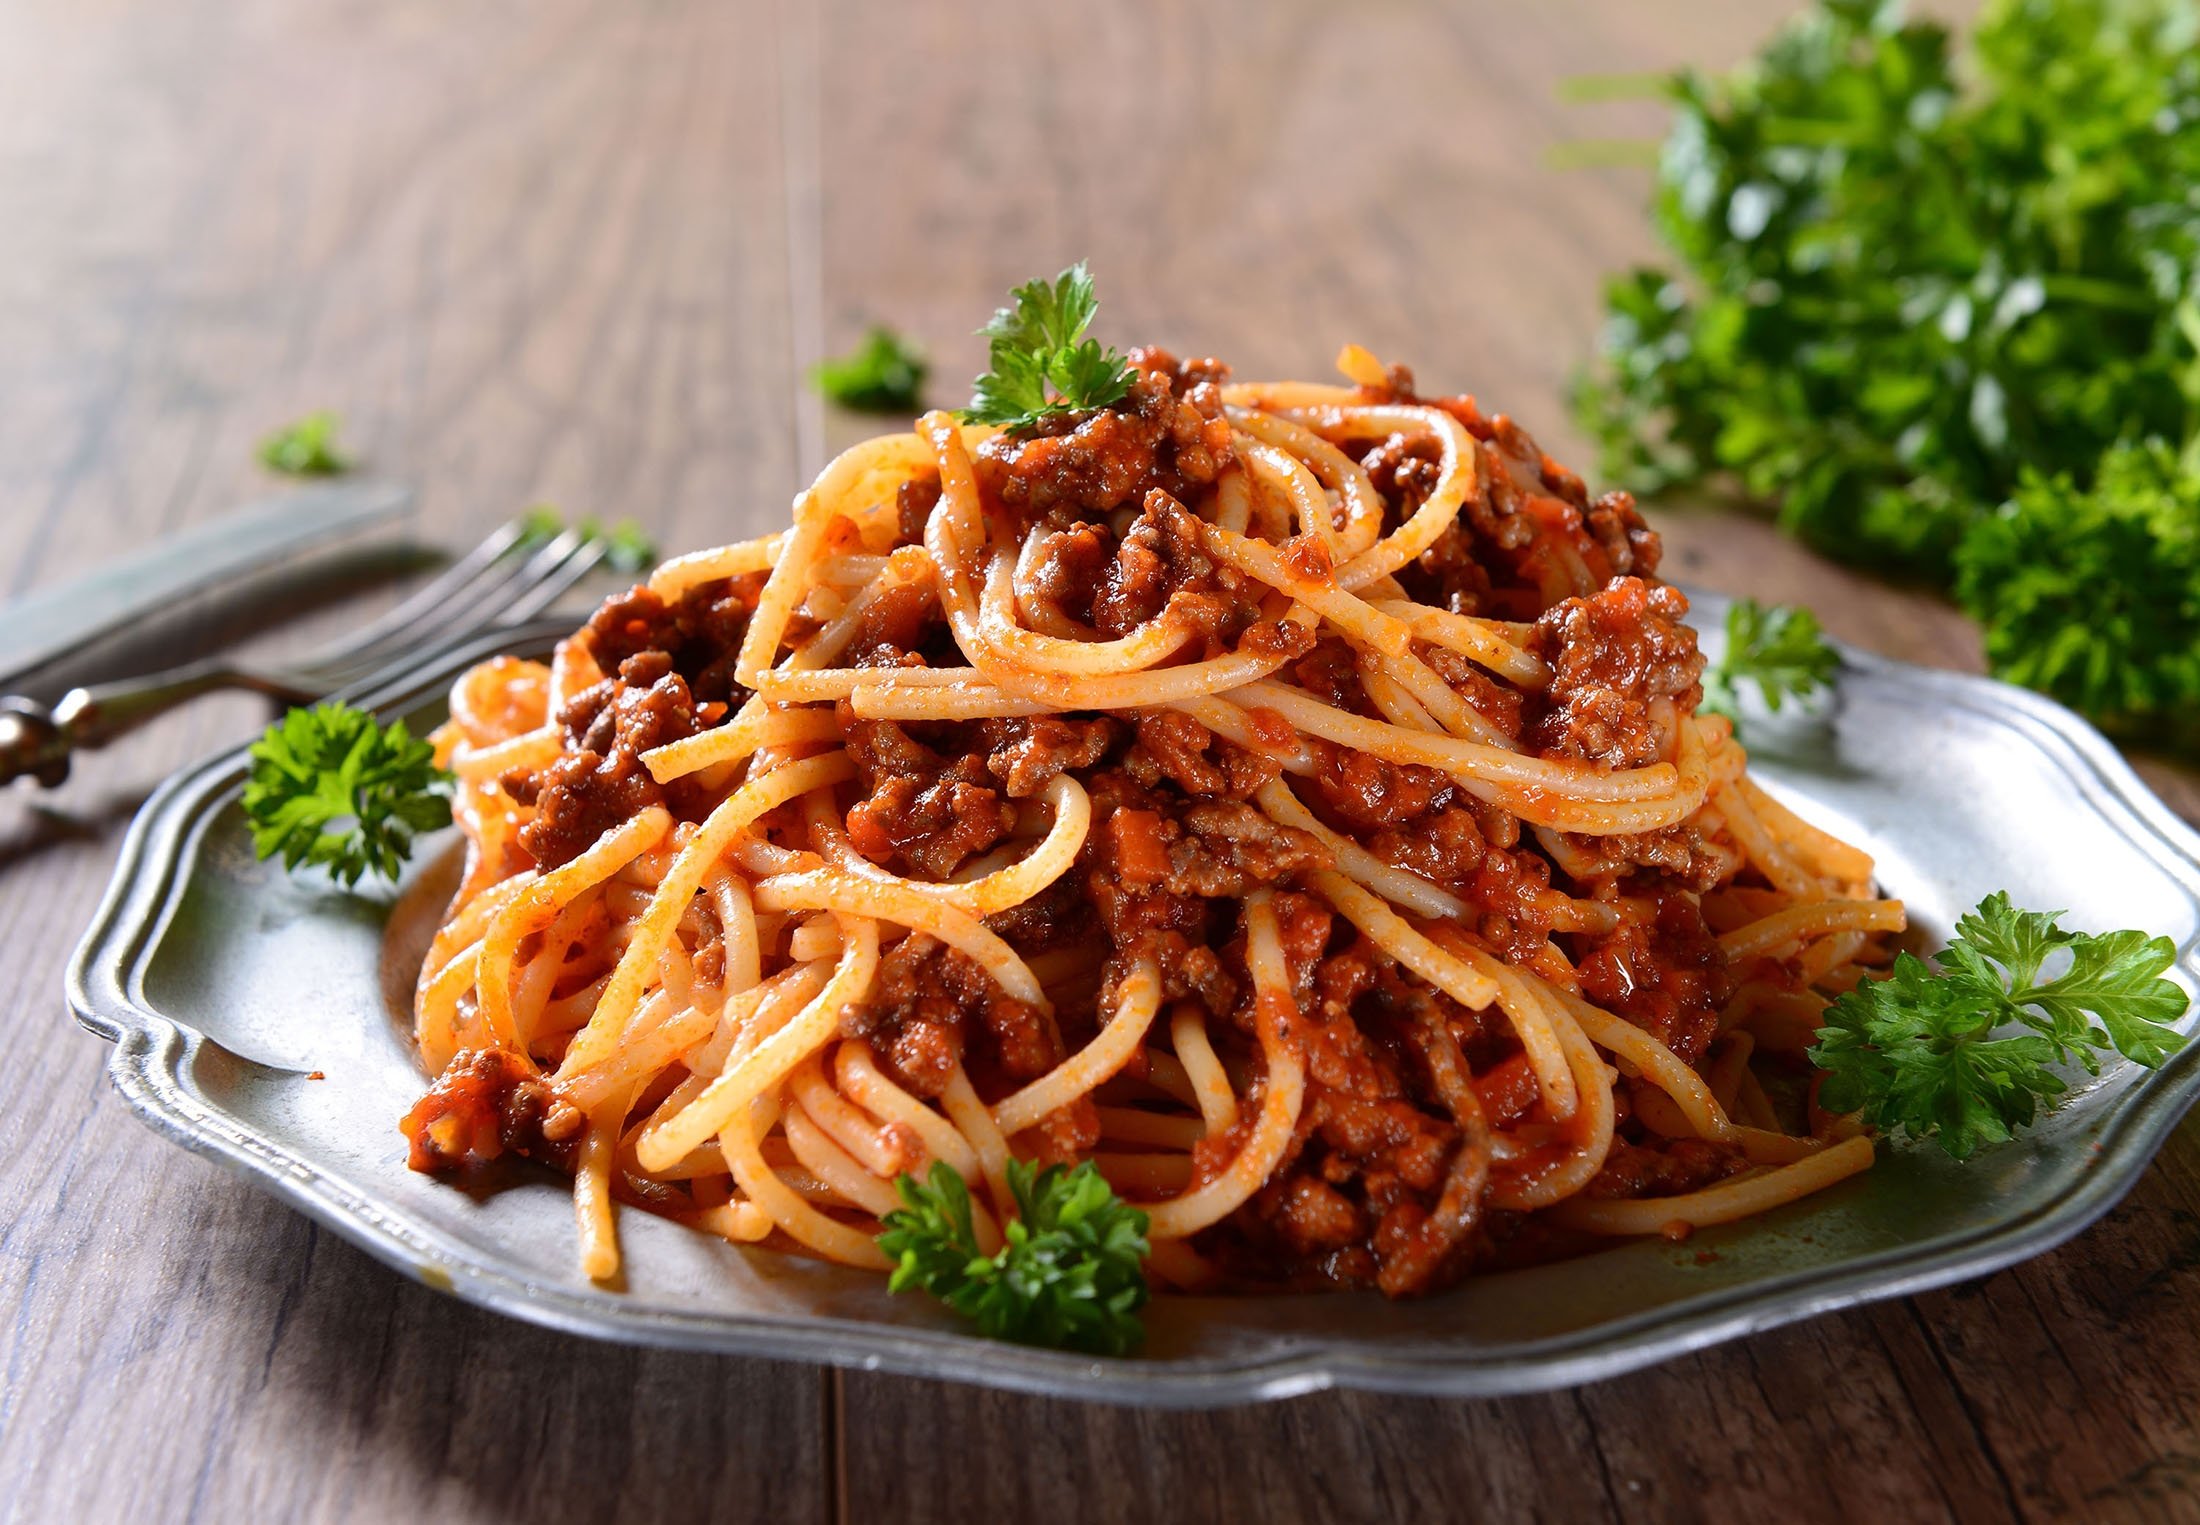 Spaghetti Bolognese adalah hidangan cepat, relatif tidak berantakan untuk makan malam.  (Foto Shutterstock)